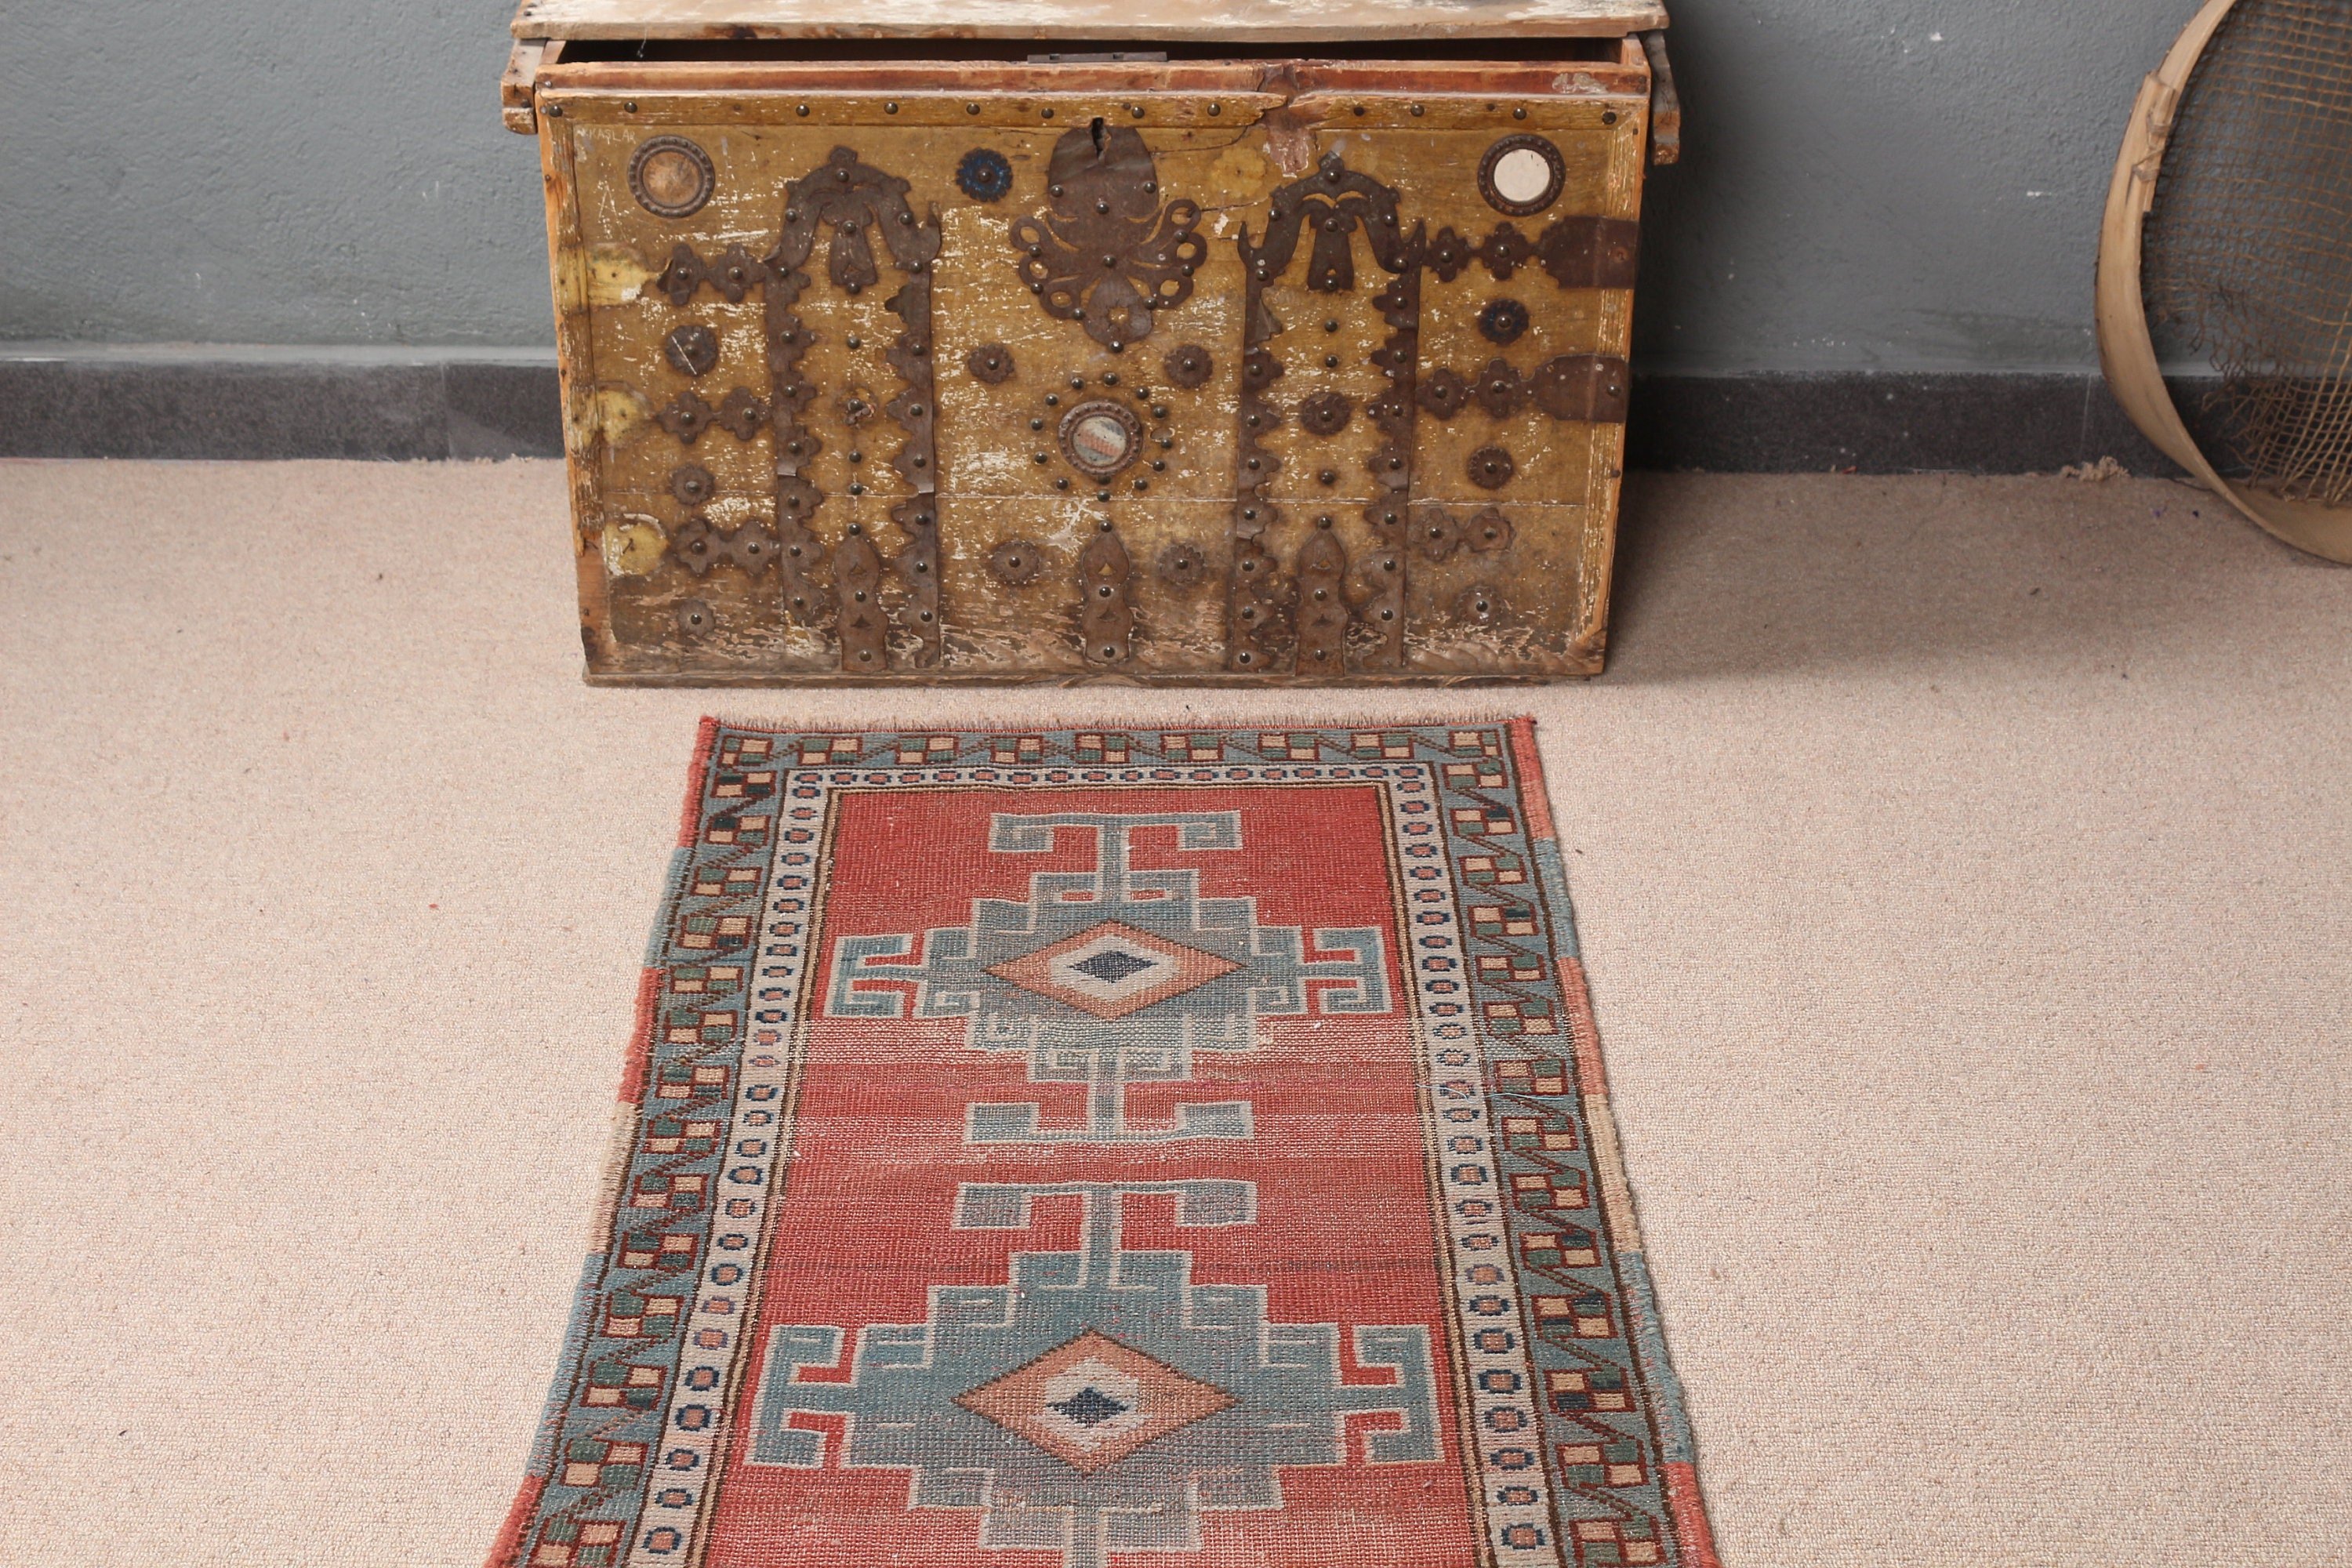 Vintage Rug, Bedroom Rugs, Door Mat Rug, 2.2x3.5 ft Small Rug, Anatolian Rug, Turkish Rug, Red Floor Rugs, Antique Rugs, Rugs for Entry